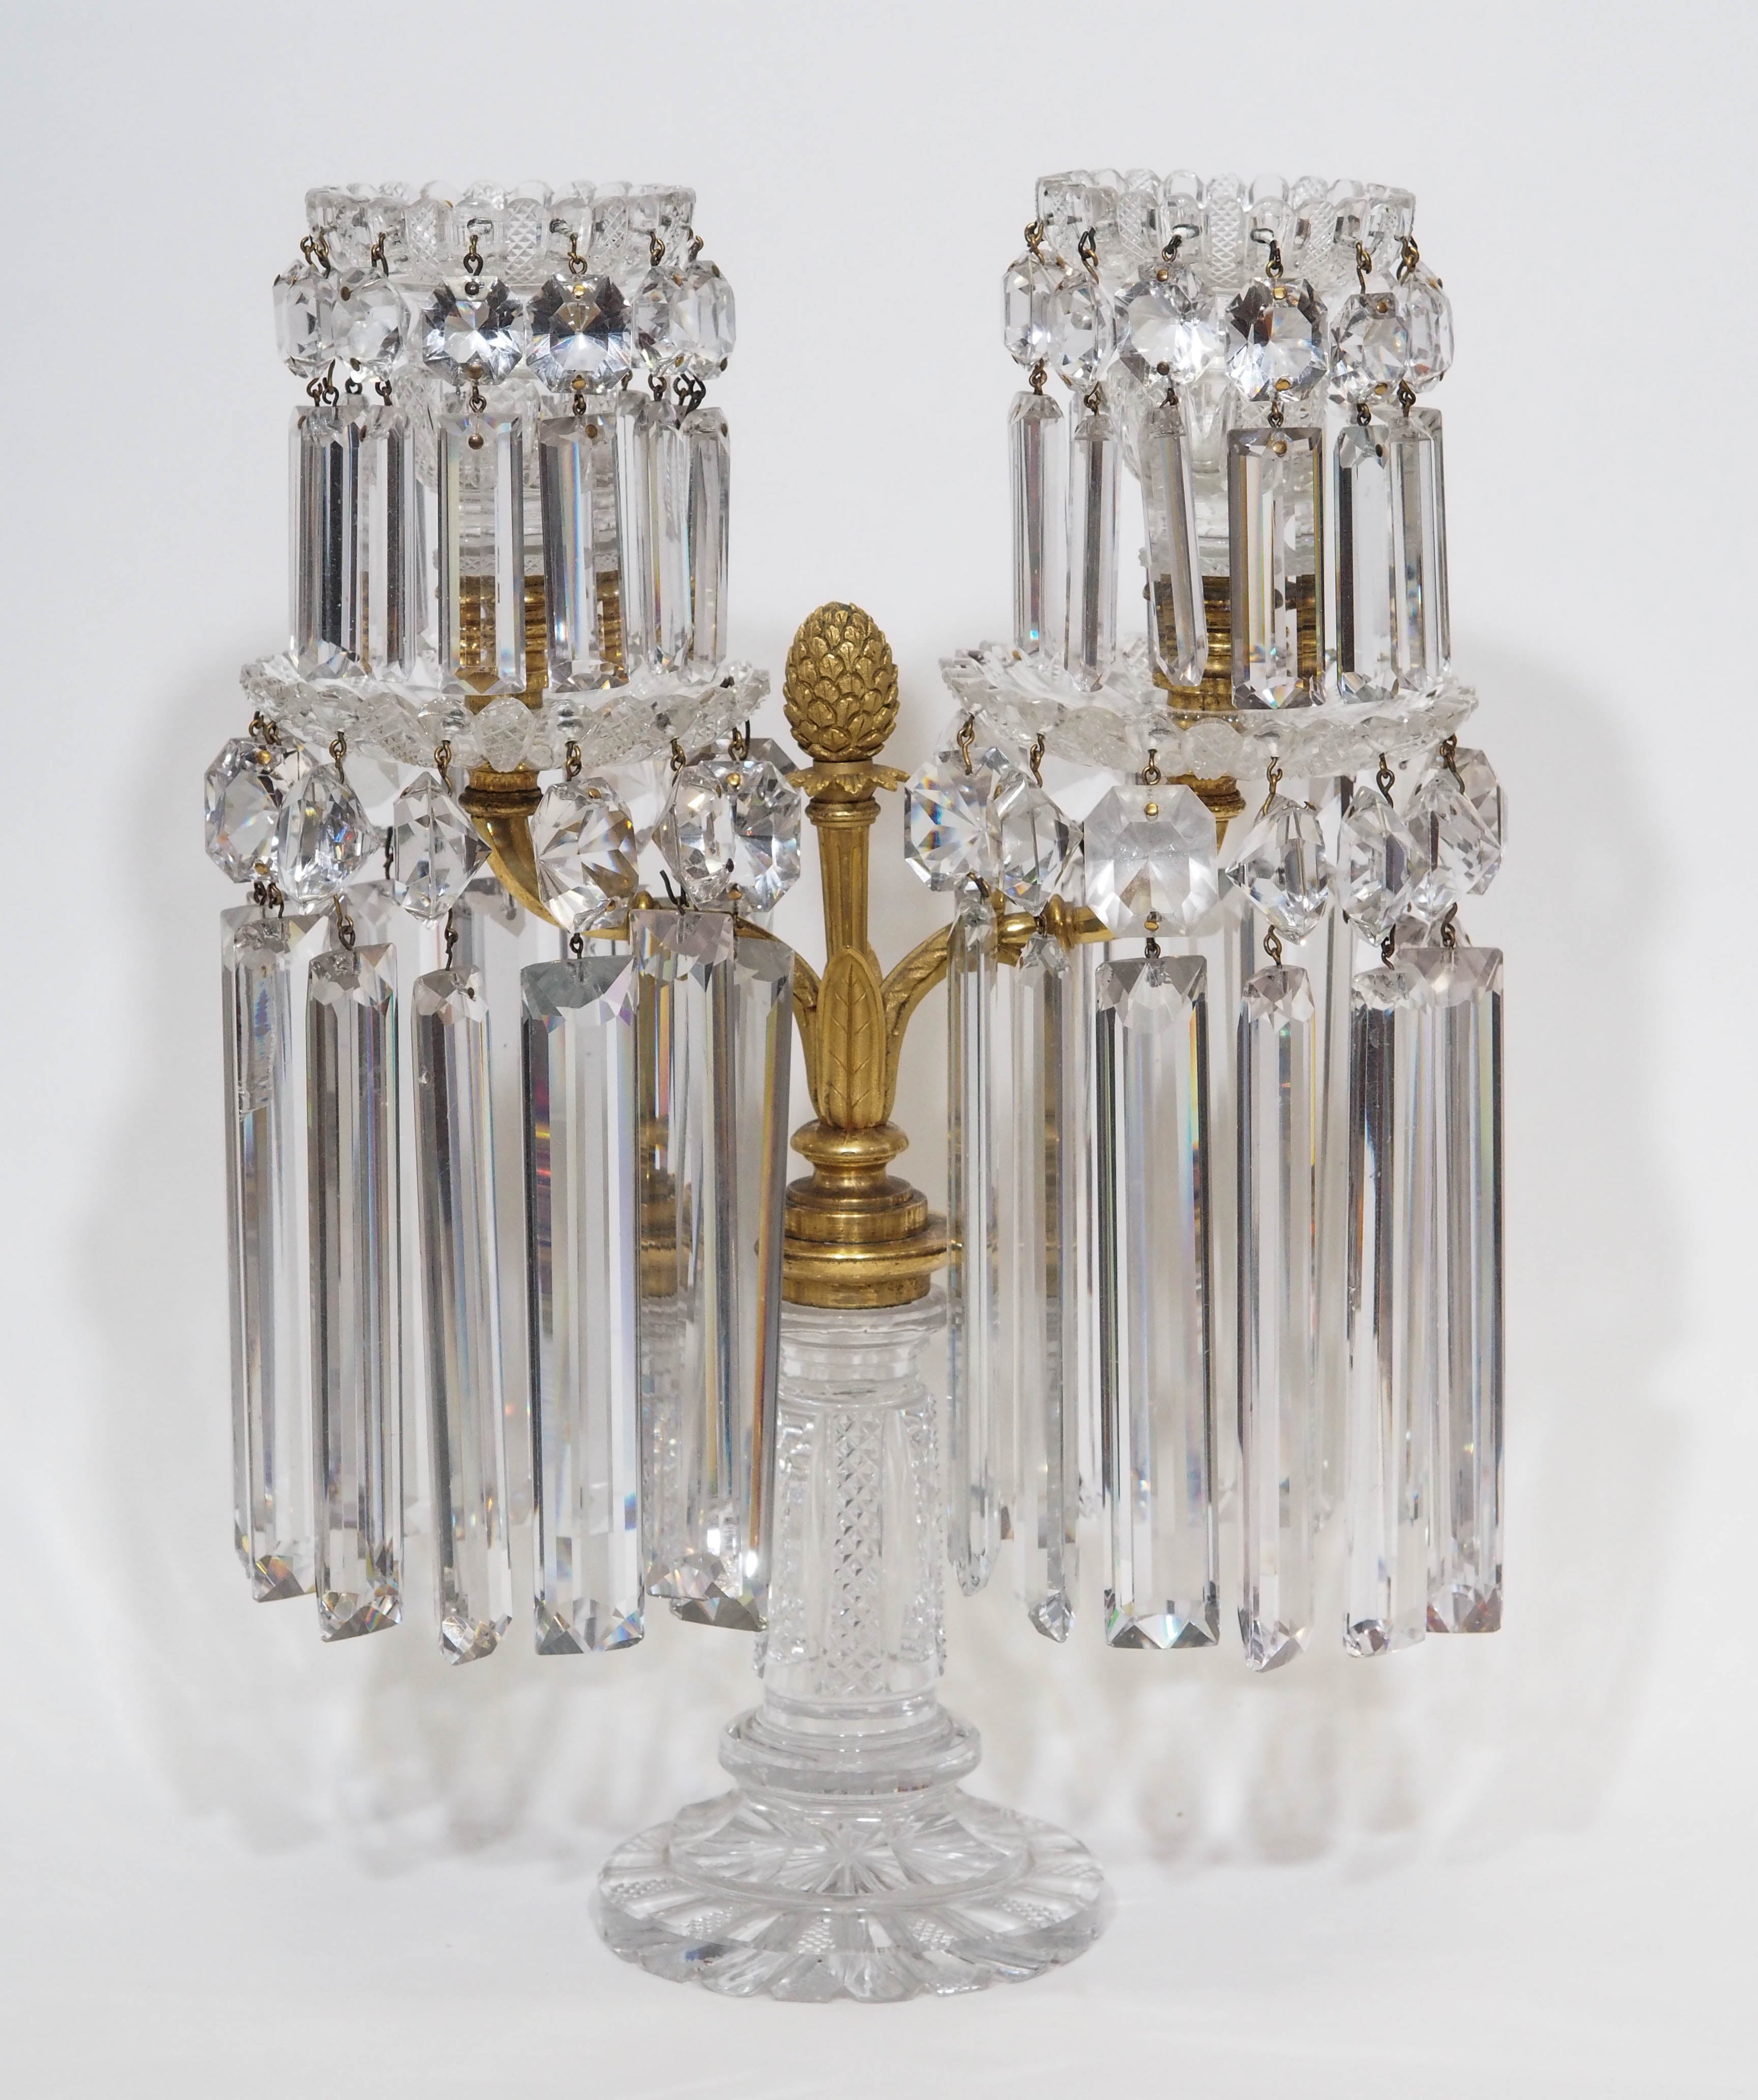 Pair of antique English Regency crystal lustres, circa 1815-1830.